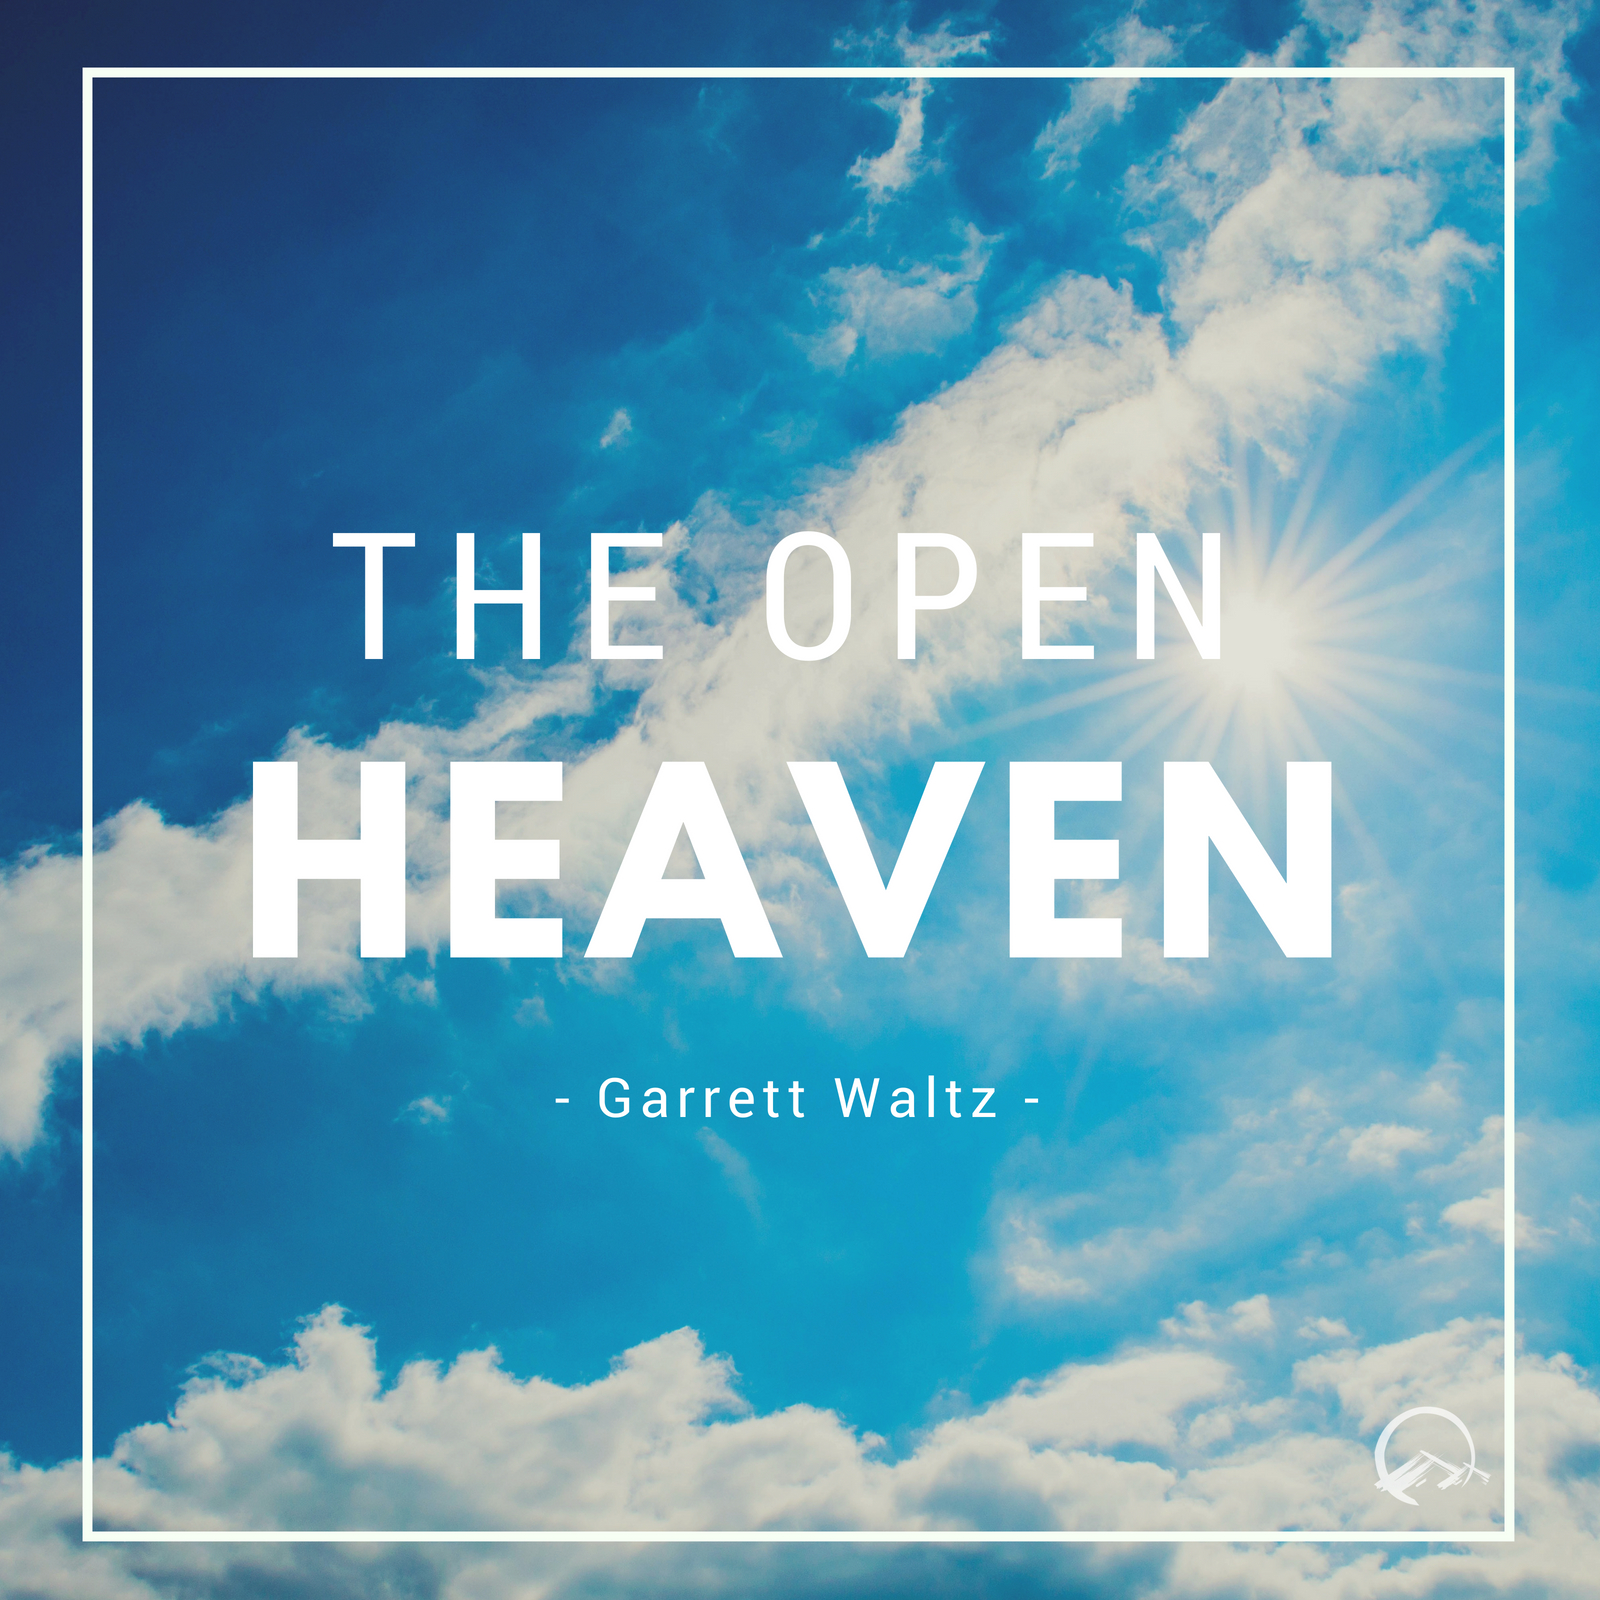 The Open Heavens